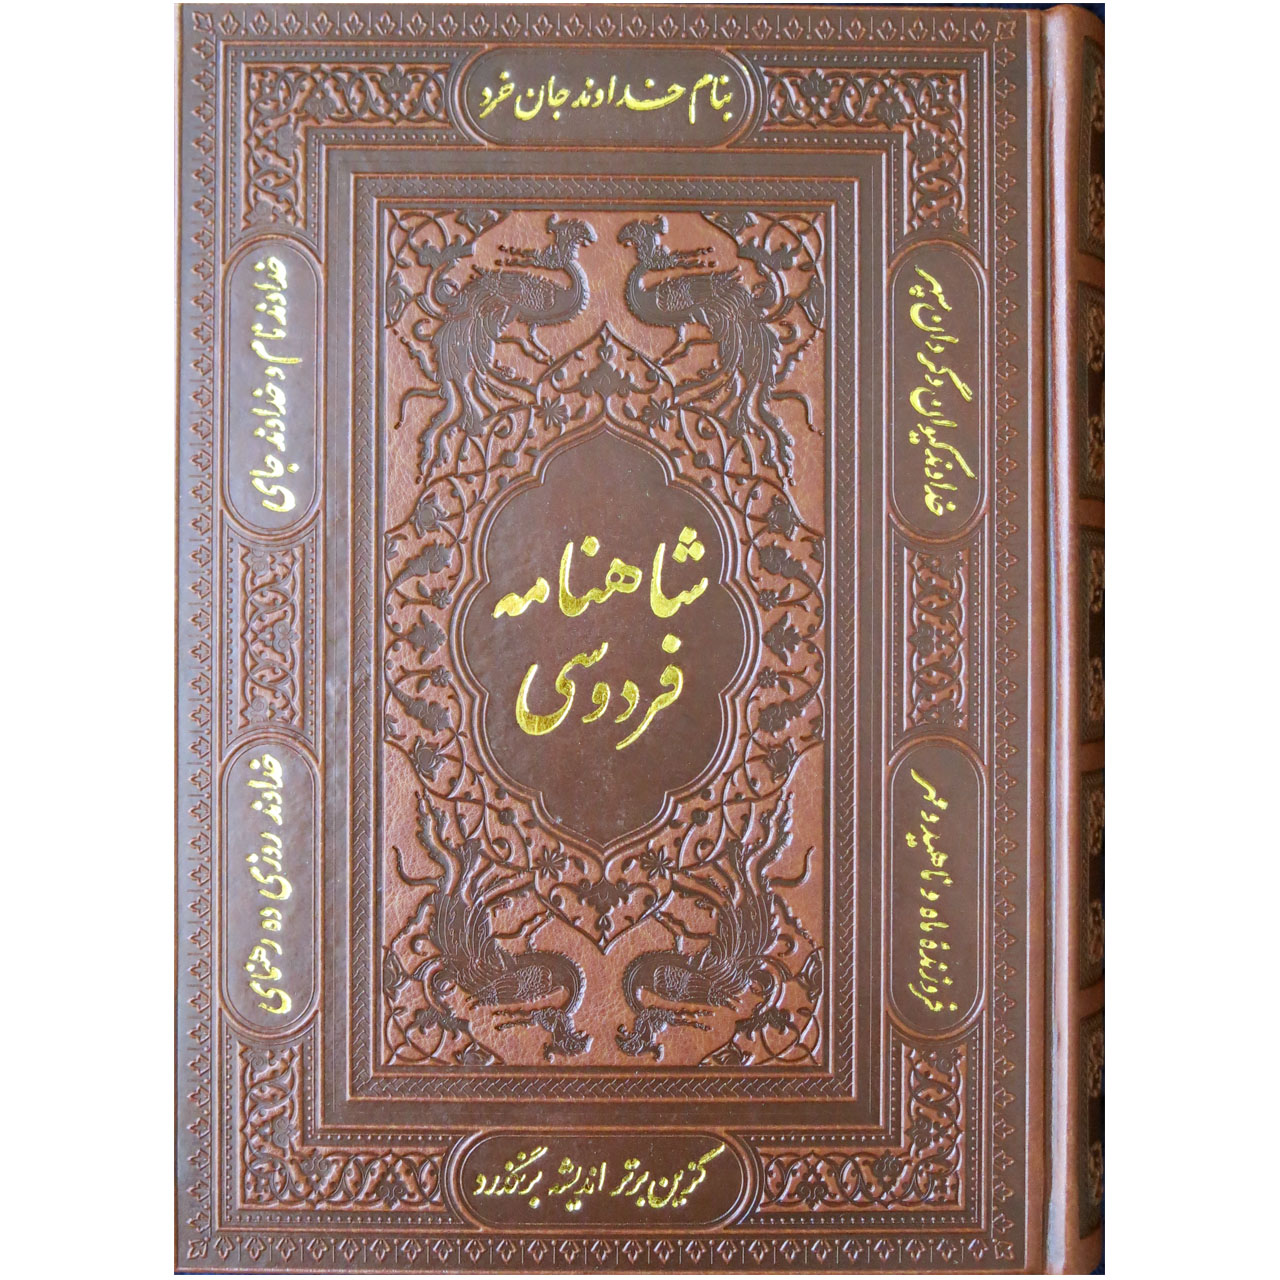 Ferdowsi shahnameh book by Hakim Abolghasem Ferdowsi